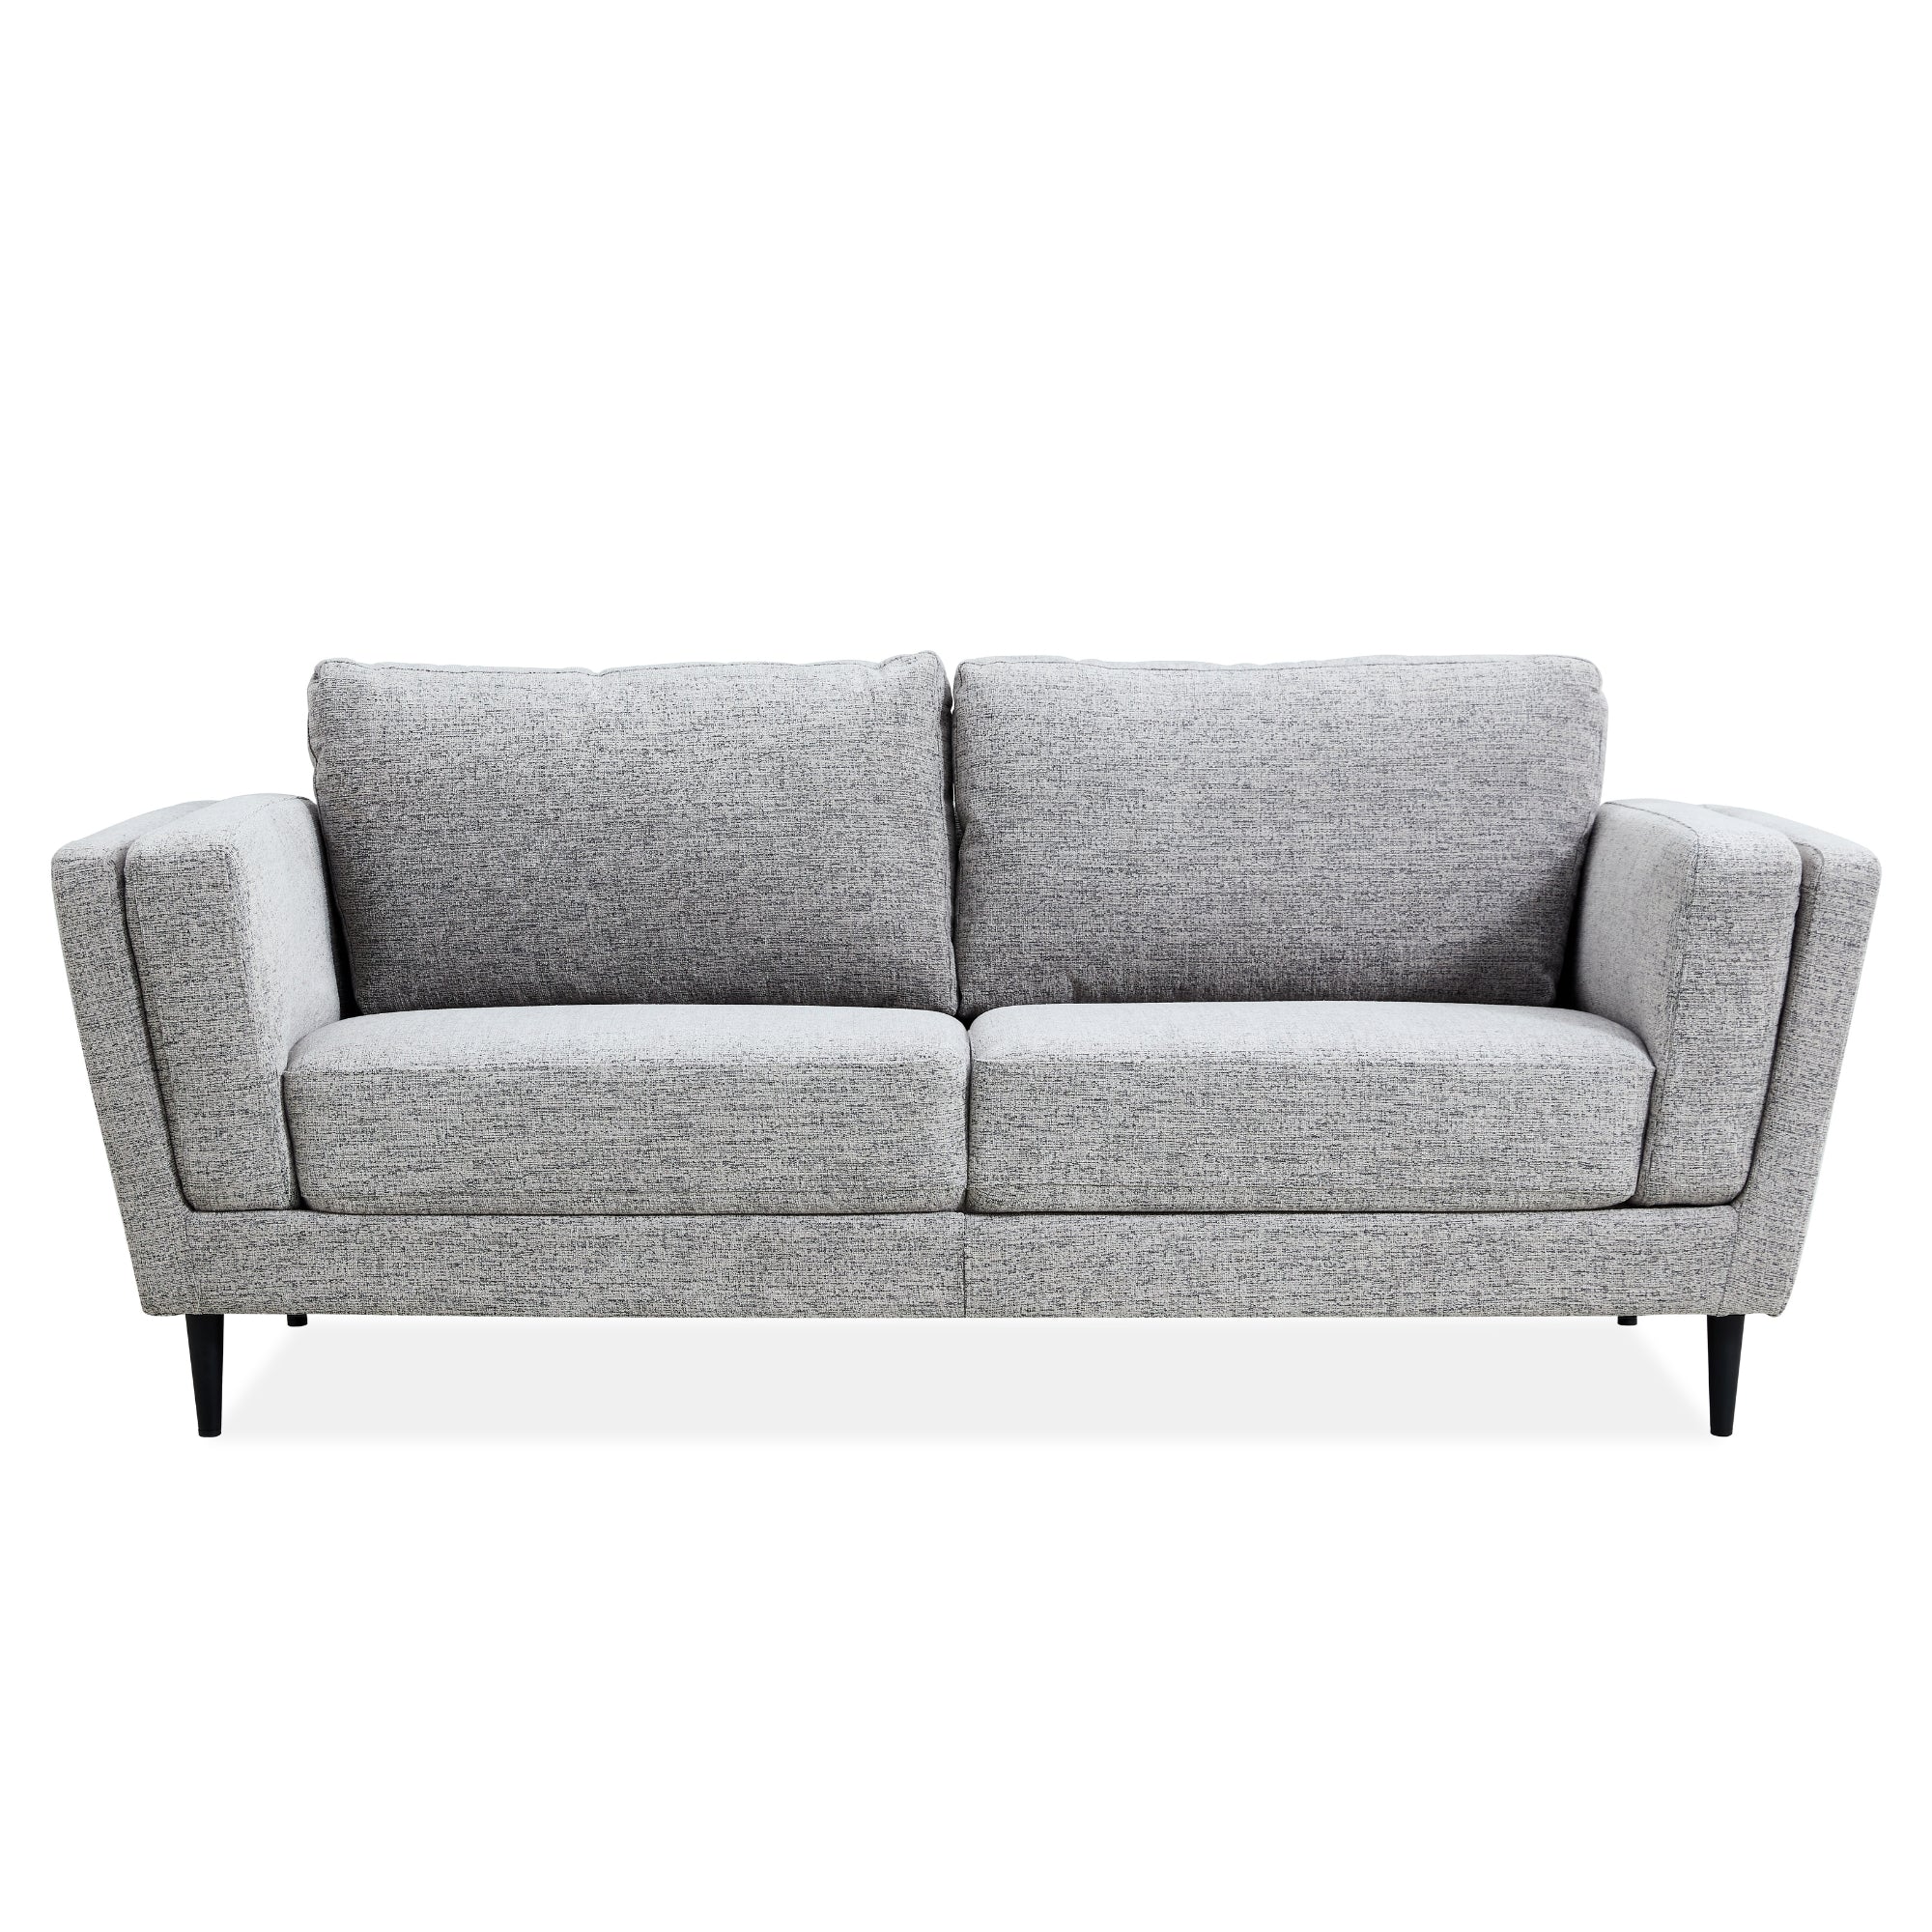 3-Seater Sofa with Galvanised Steel Frame & HD Foam